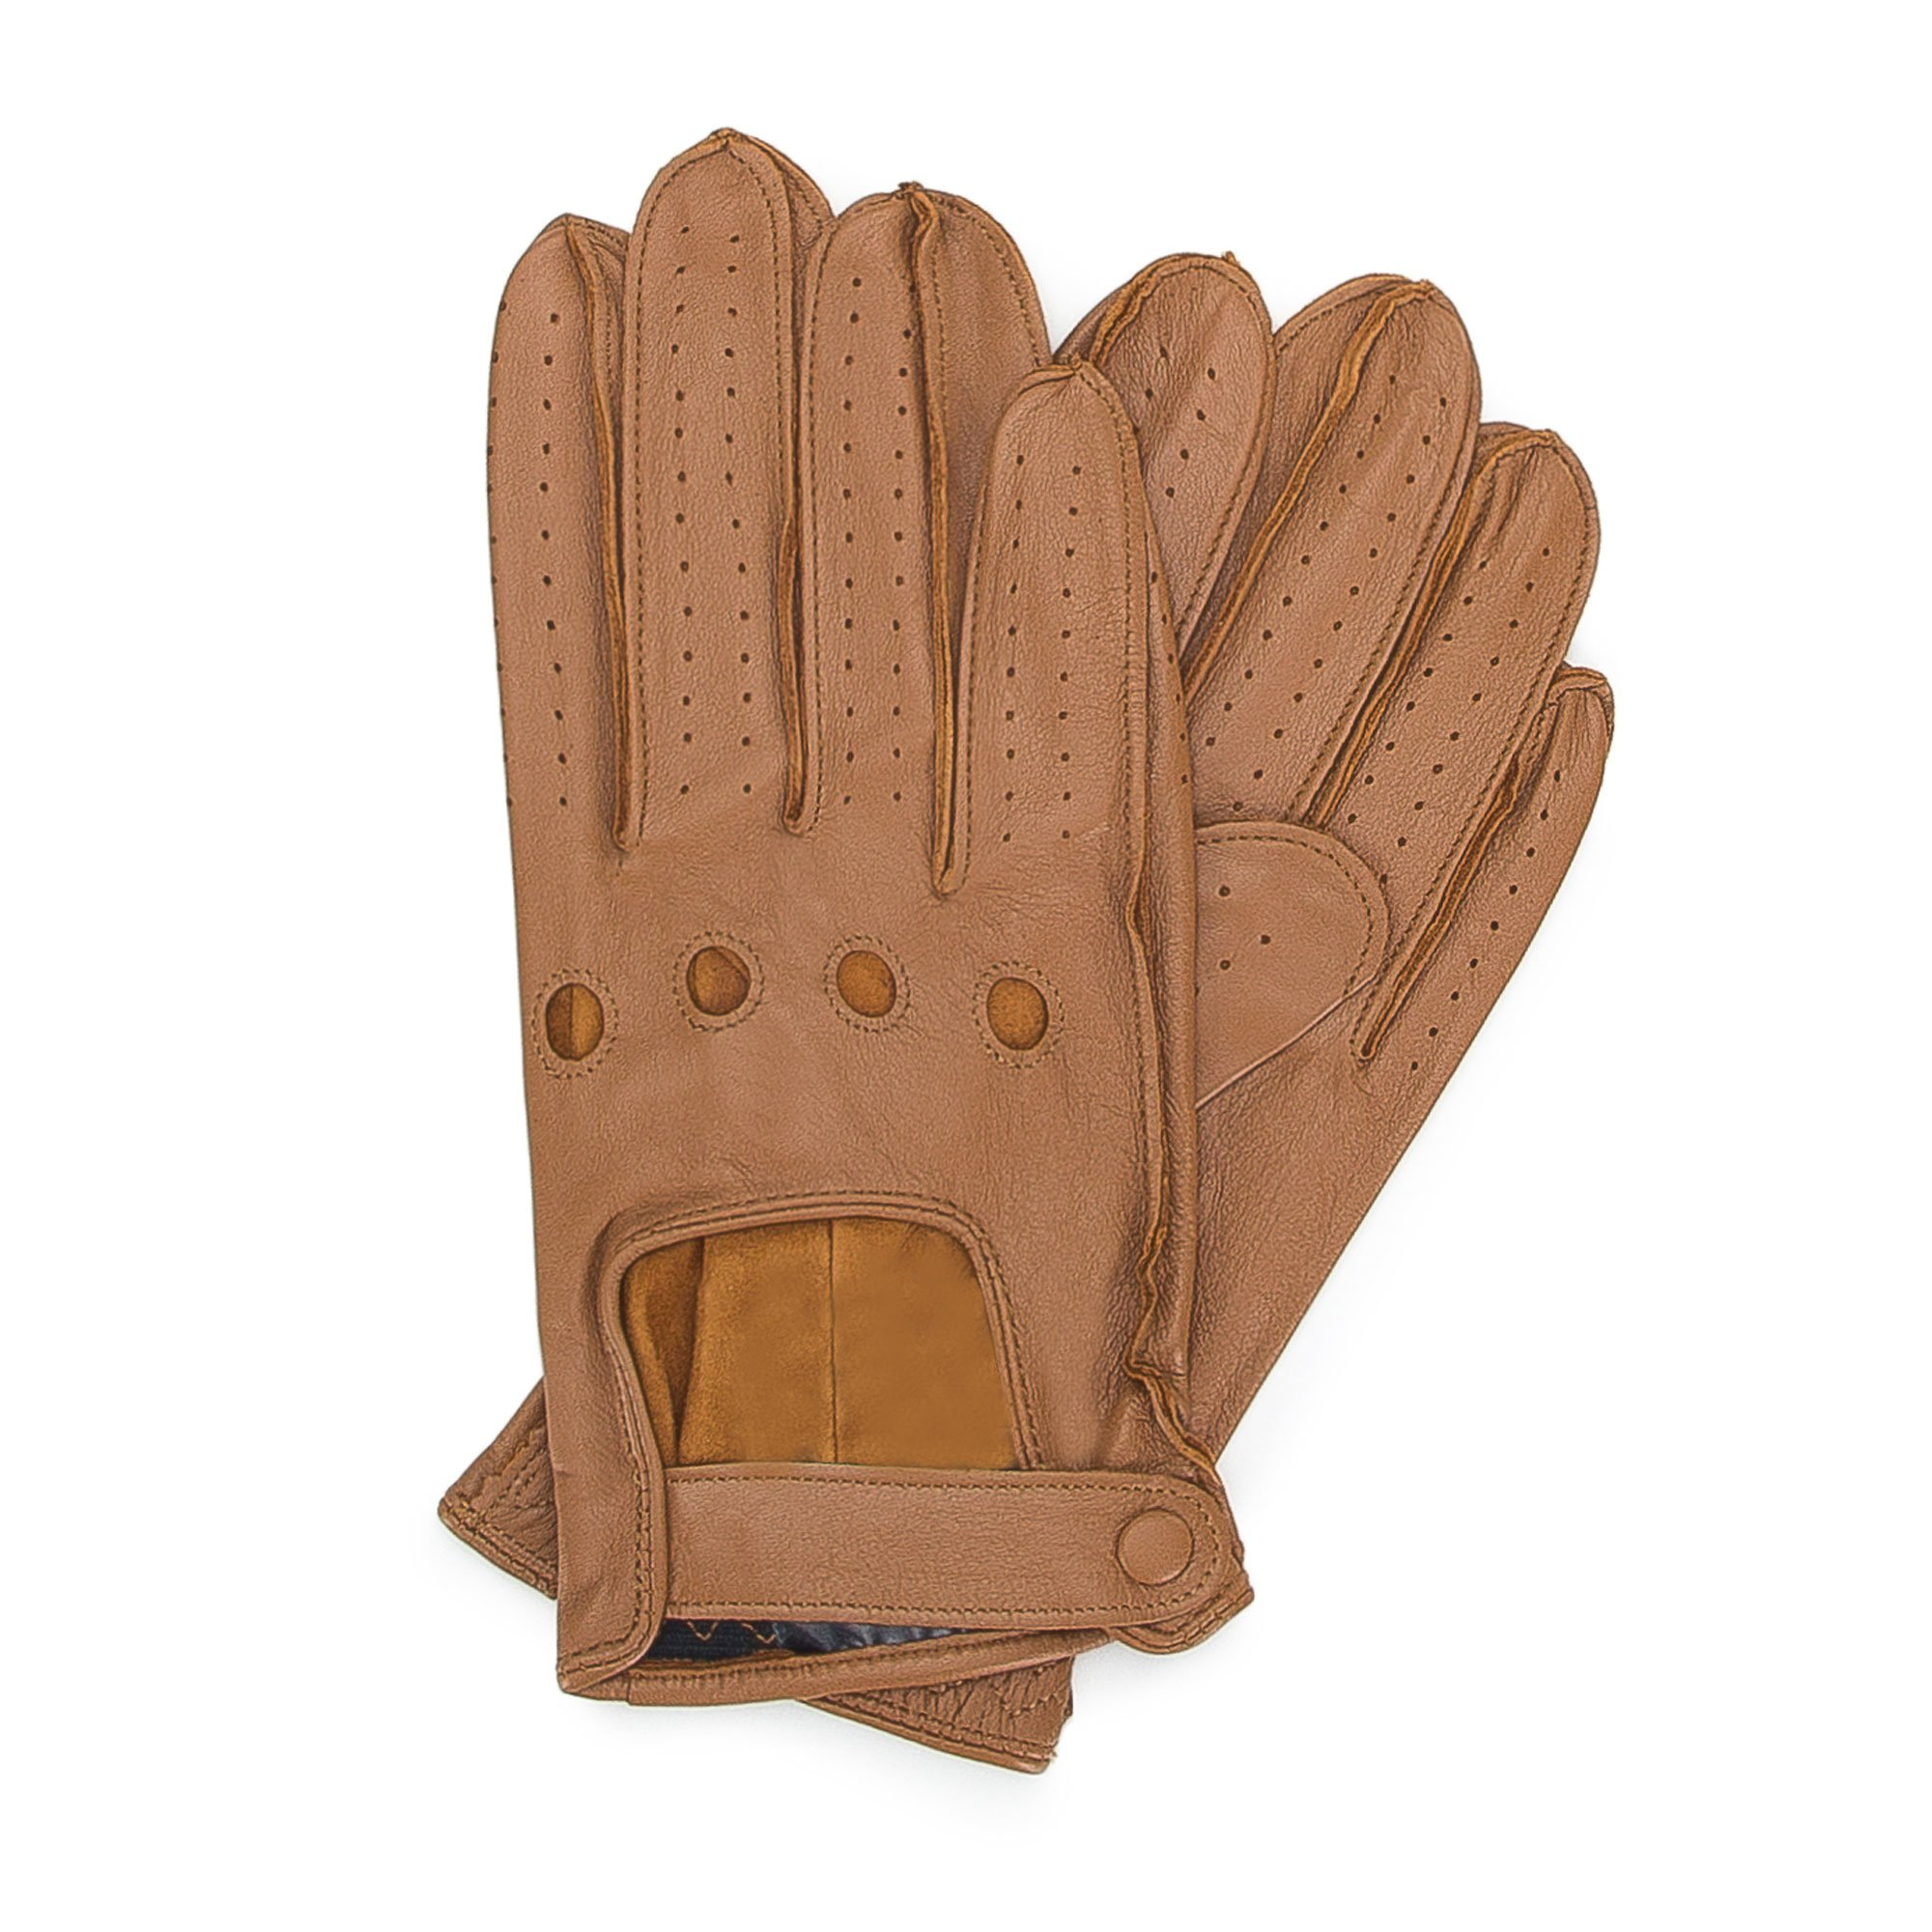 Practical men's gloves